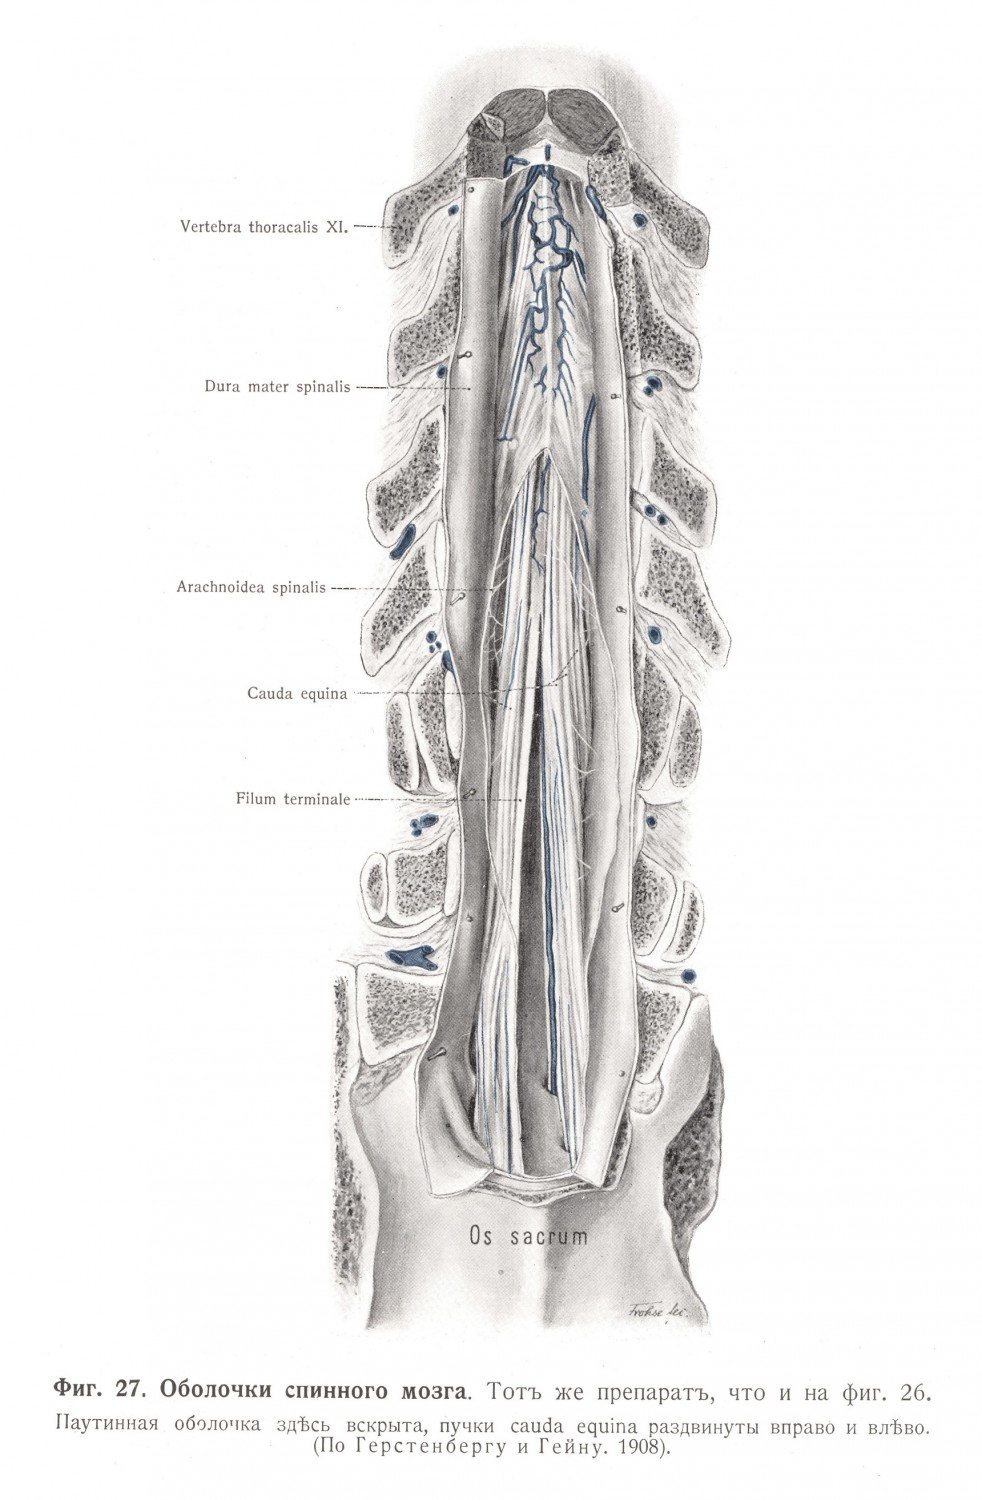 Оболочки спинного мозга